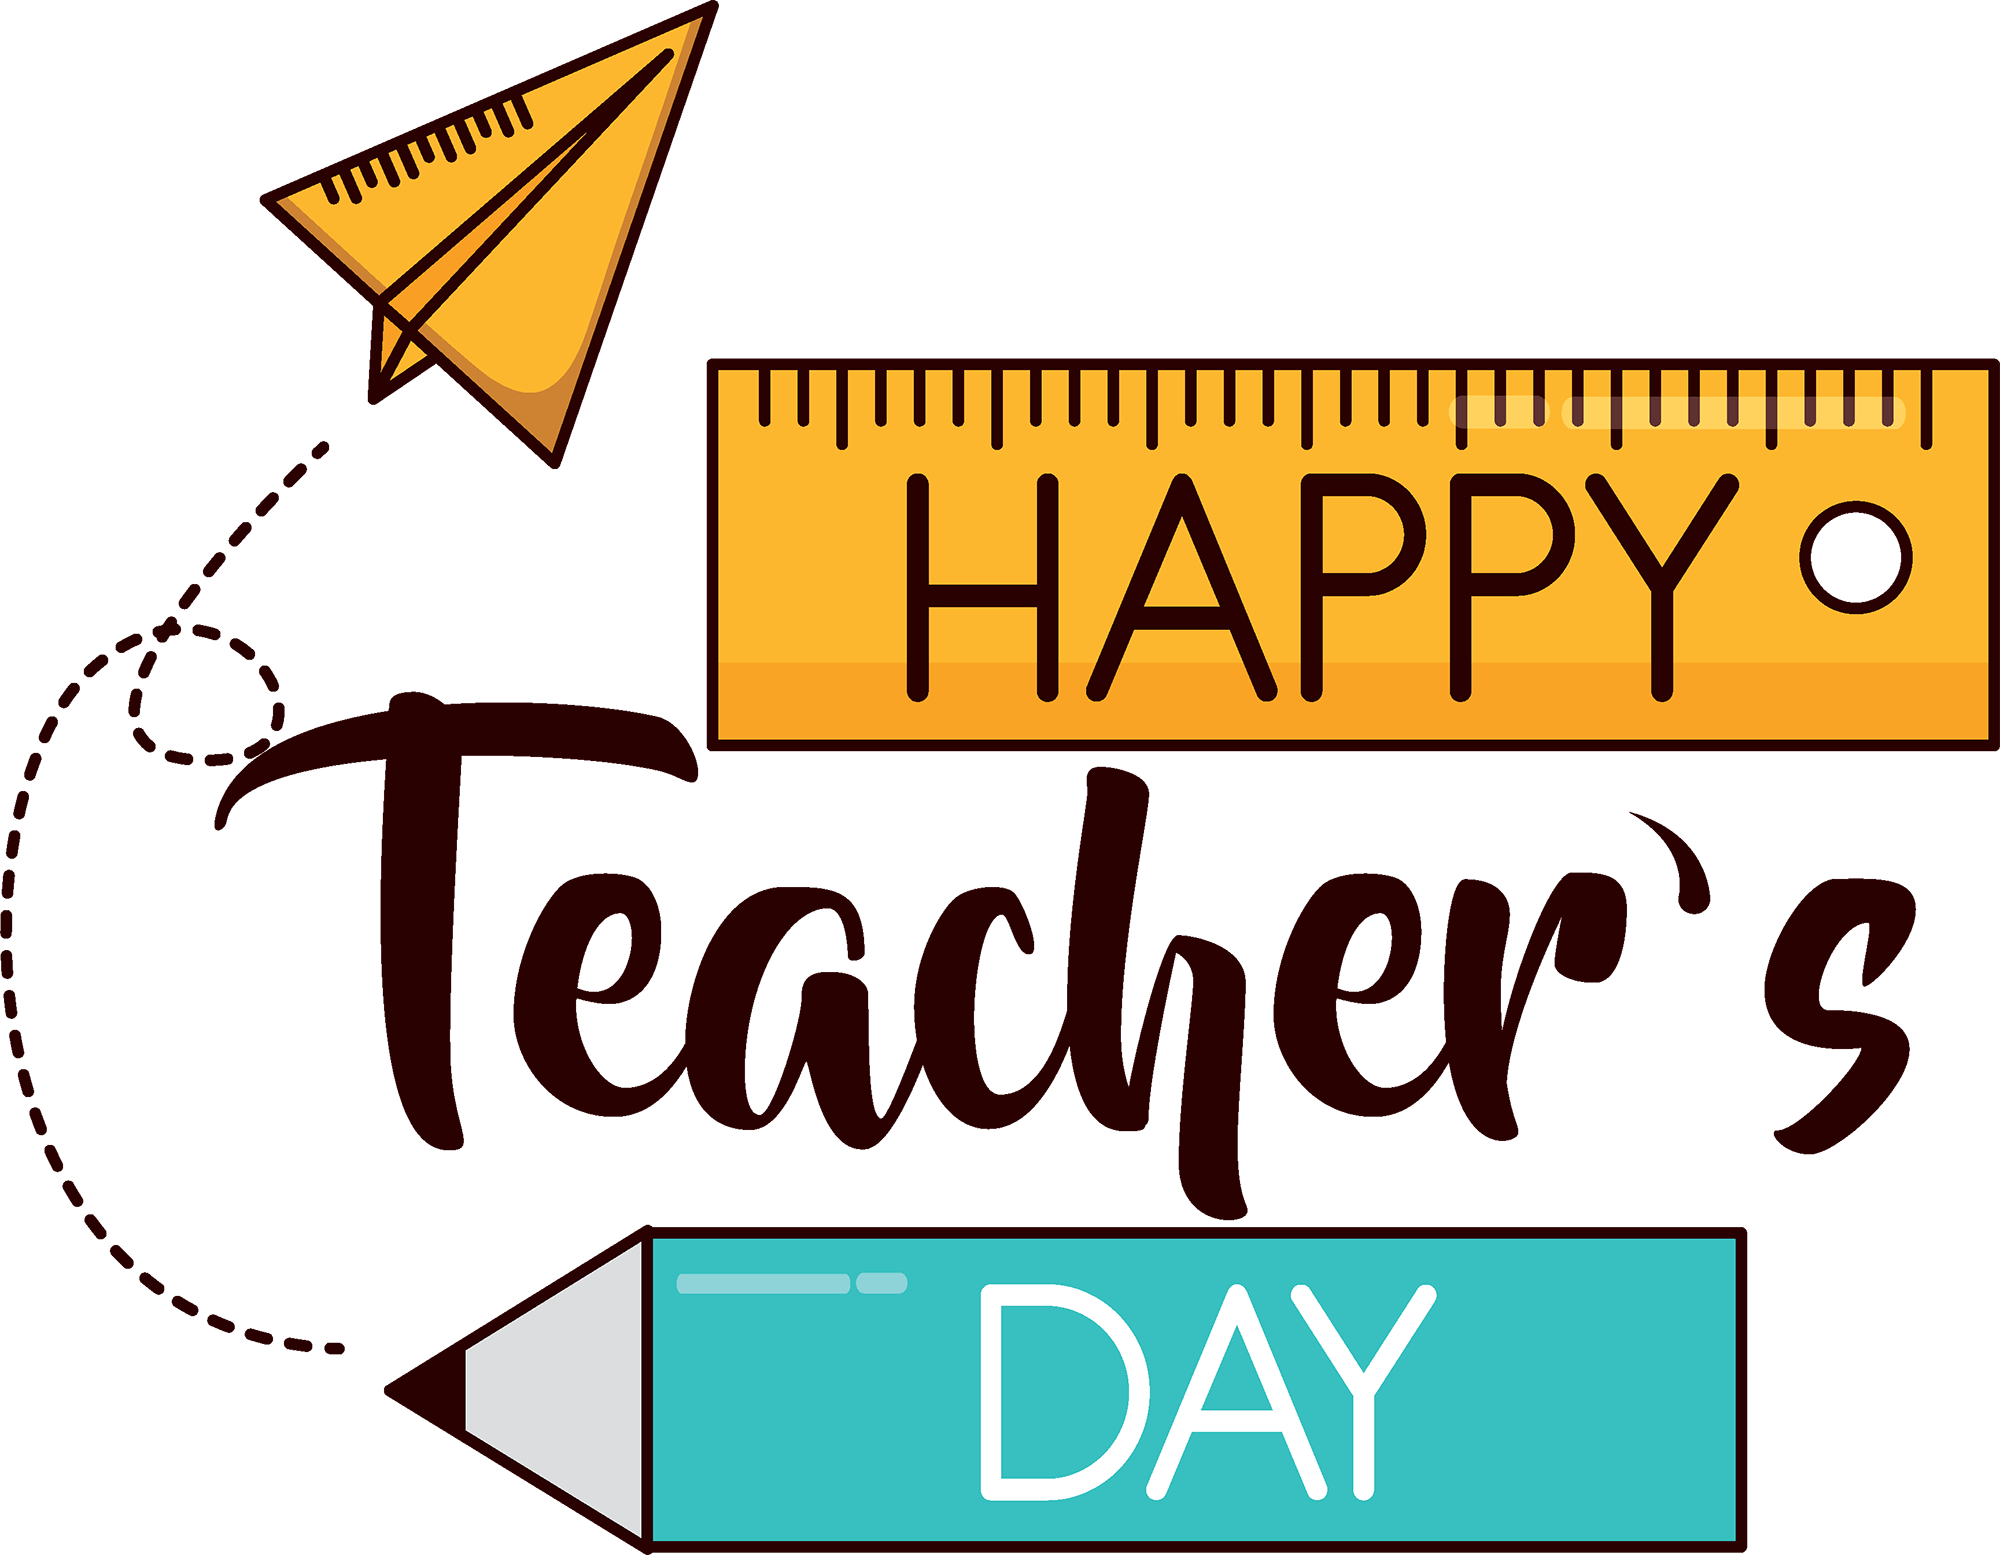    Teachers Day wish